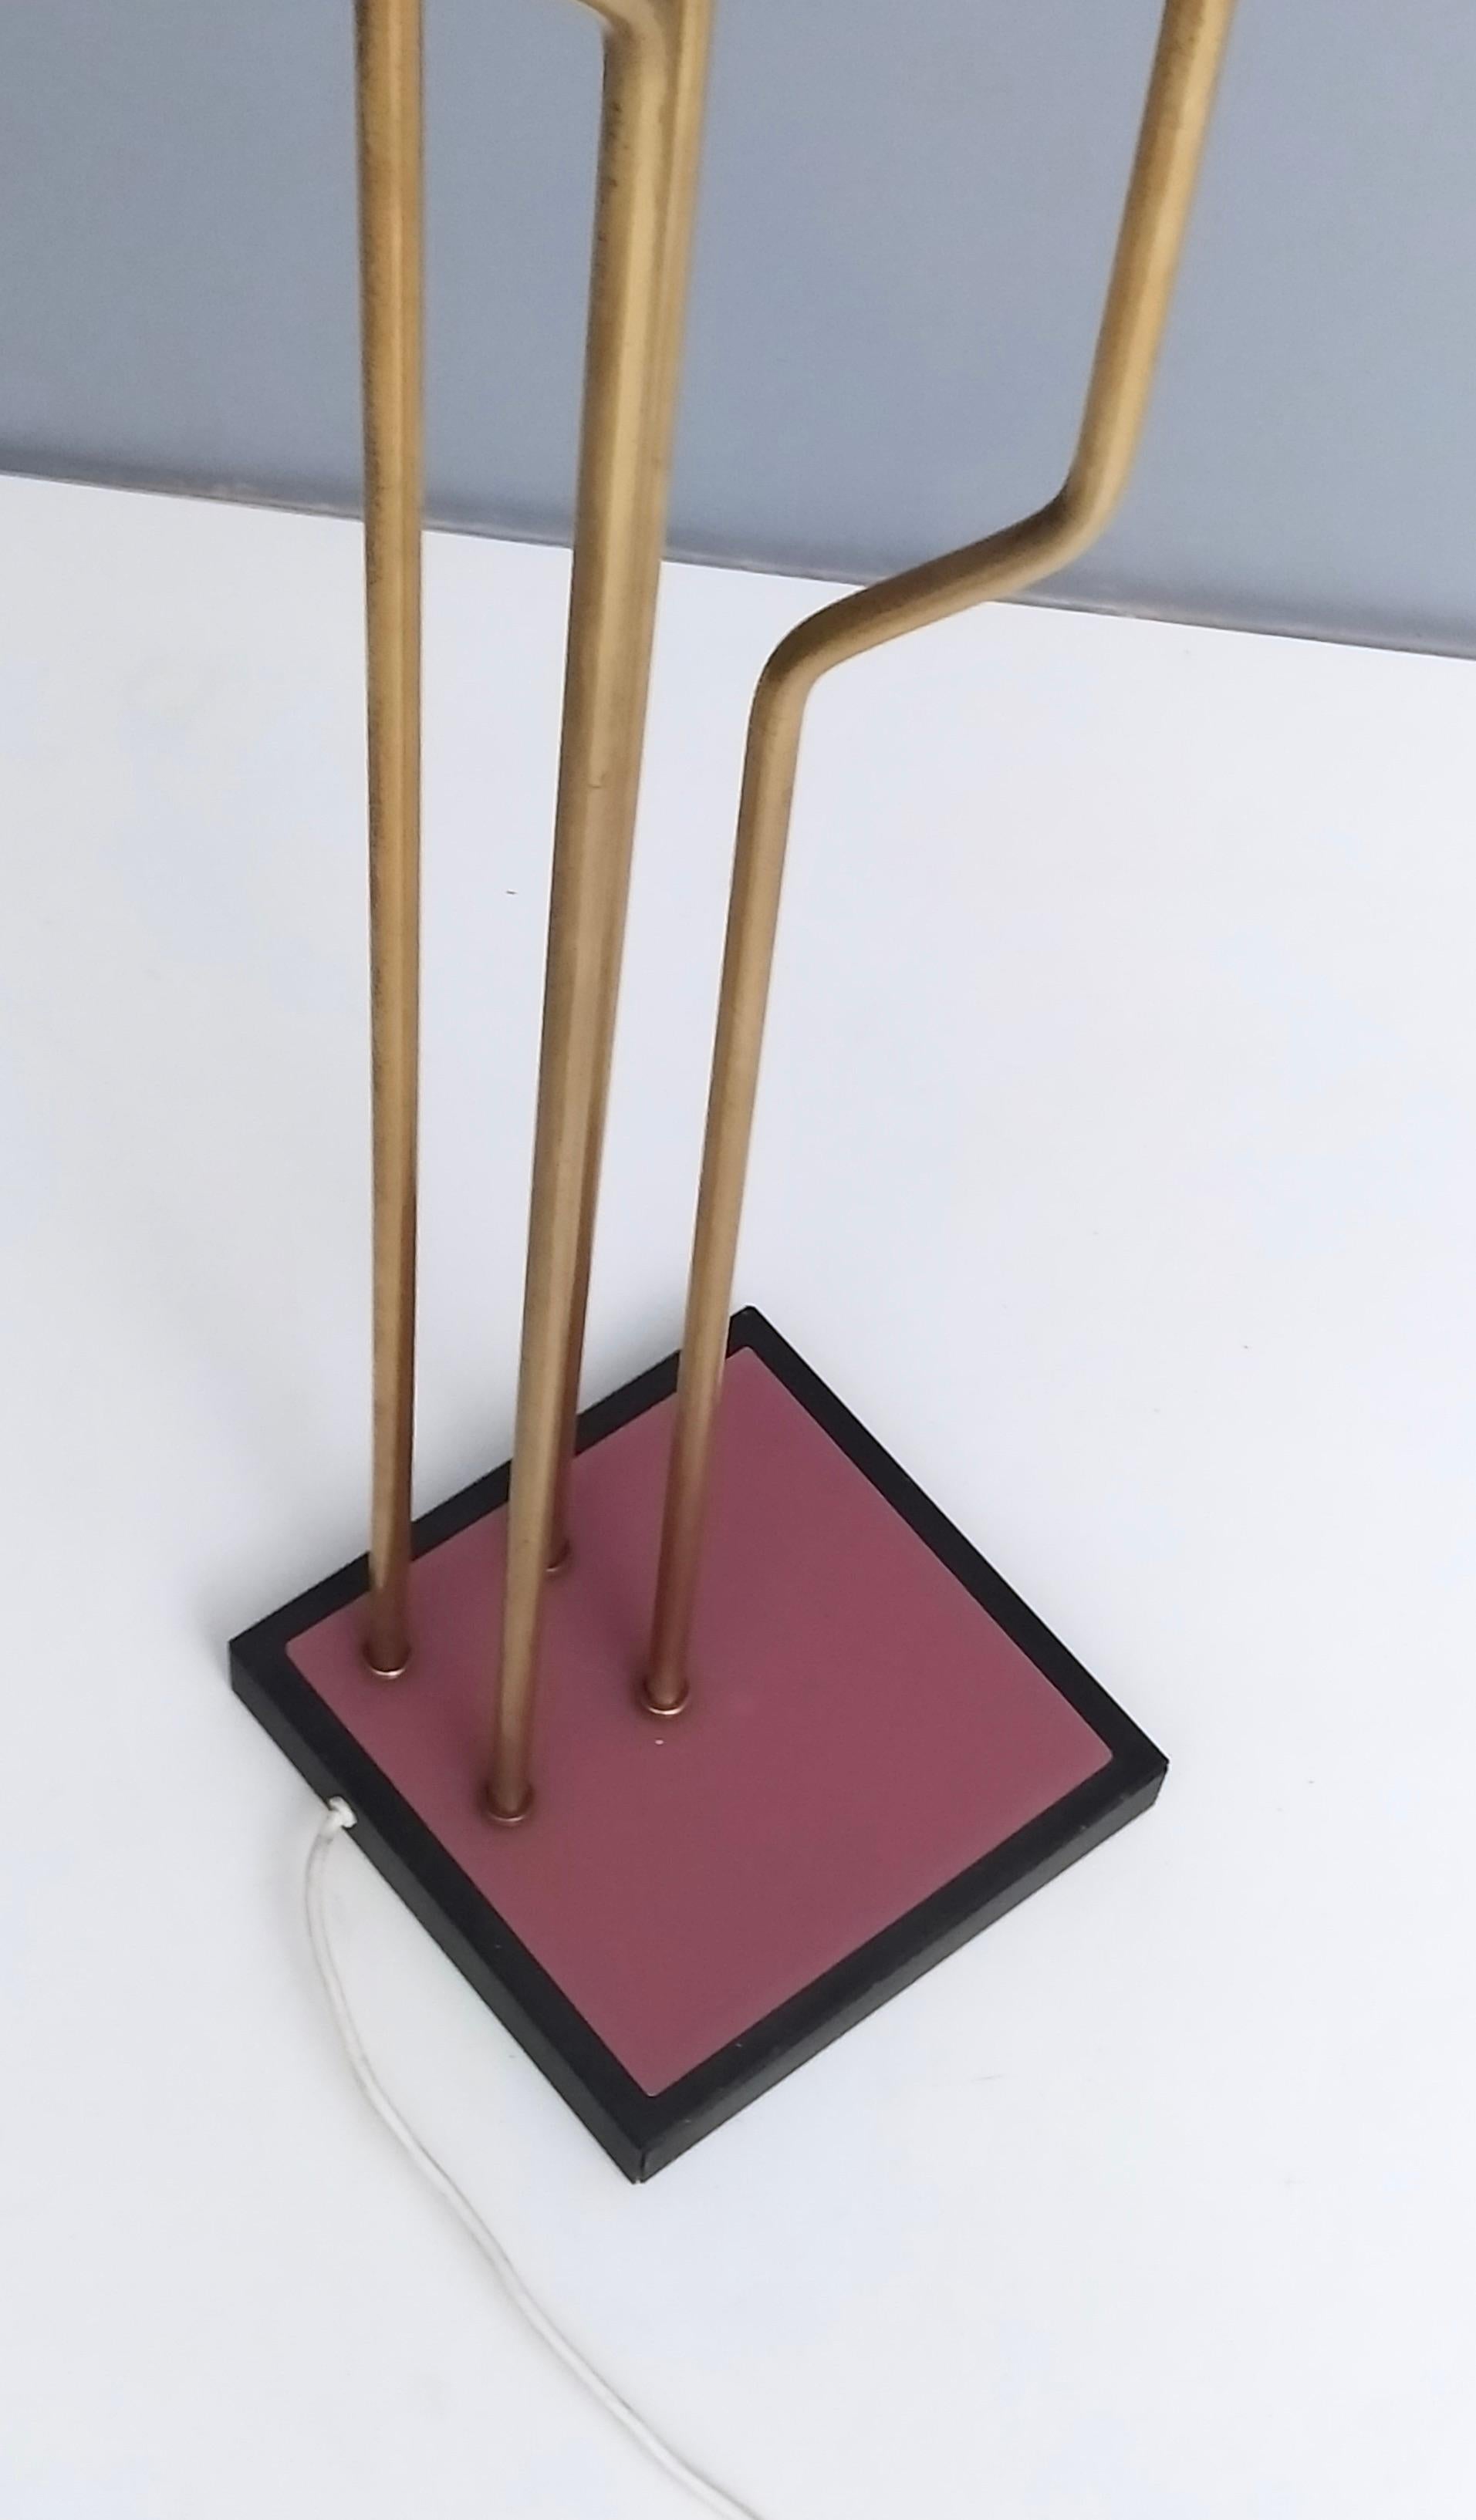 Brass, Varnished Metal and Plexiglas Floor Lamp 